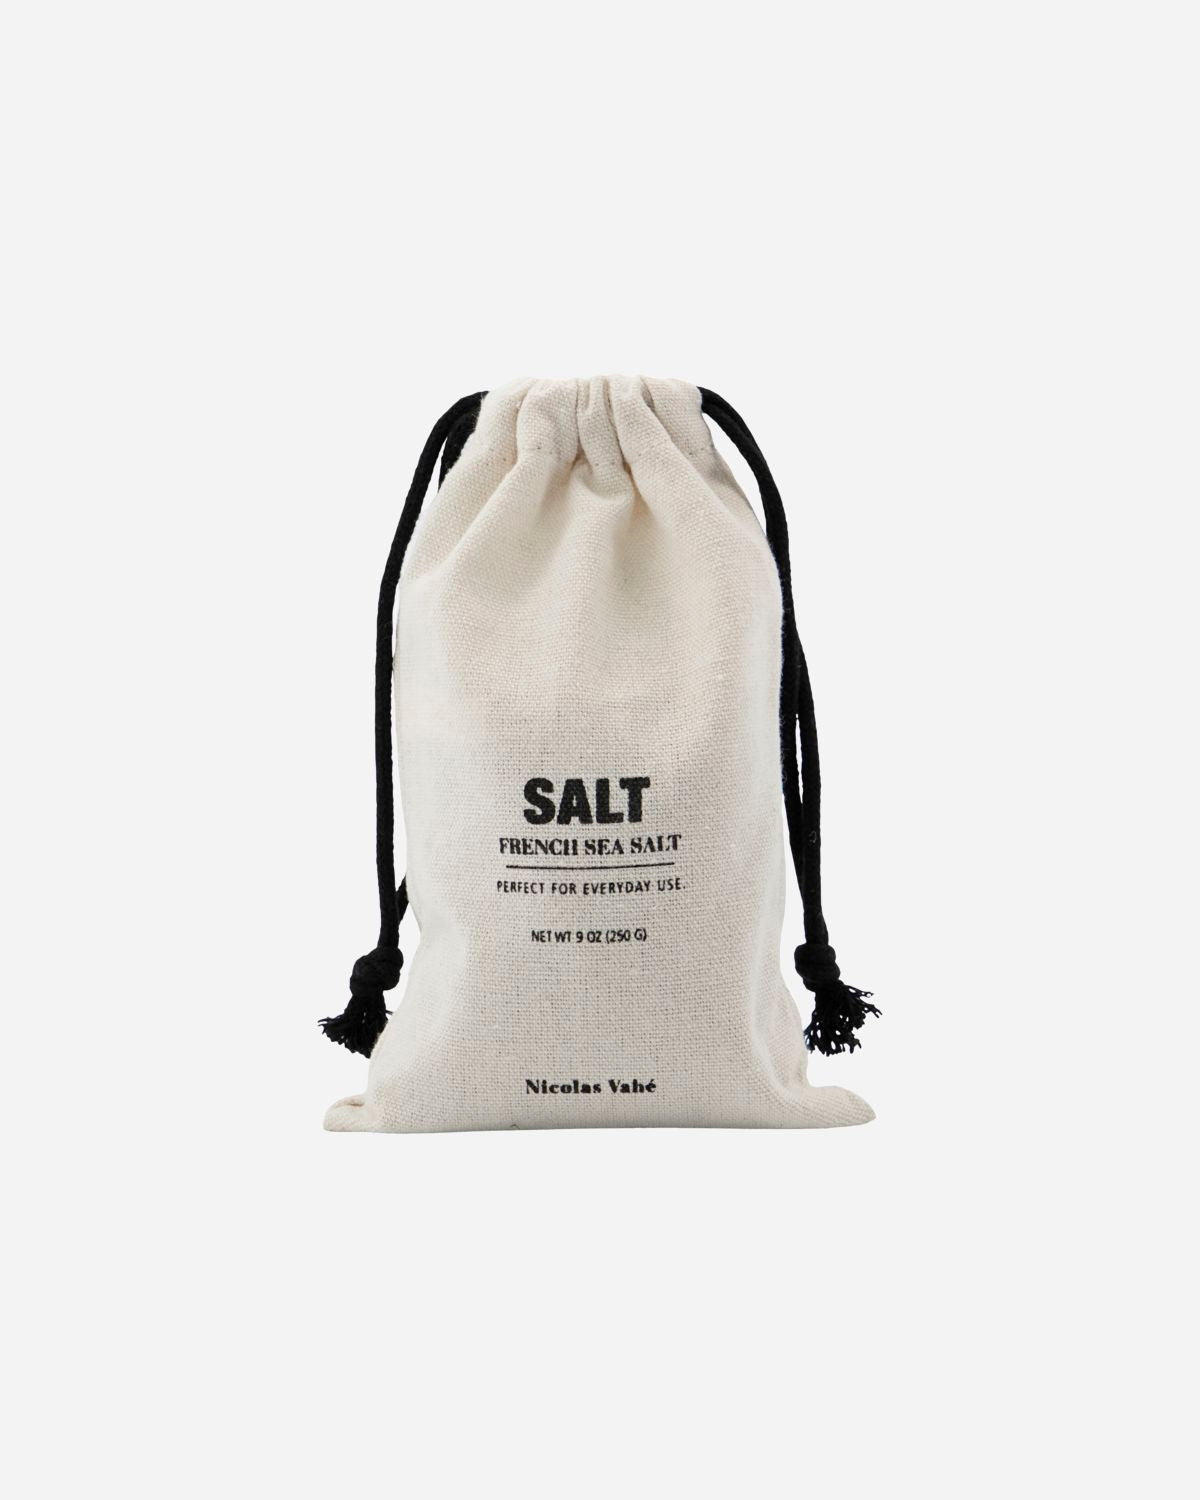 Salt Bag - Nicolas Vahé - Bluecashew Kitchen Homestead